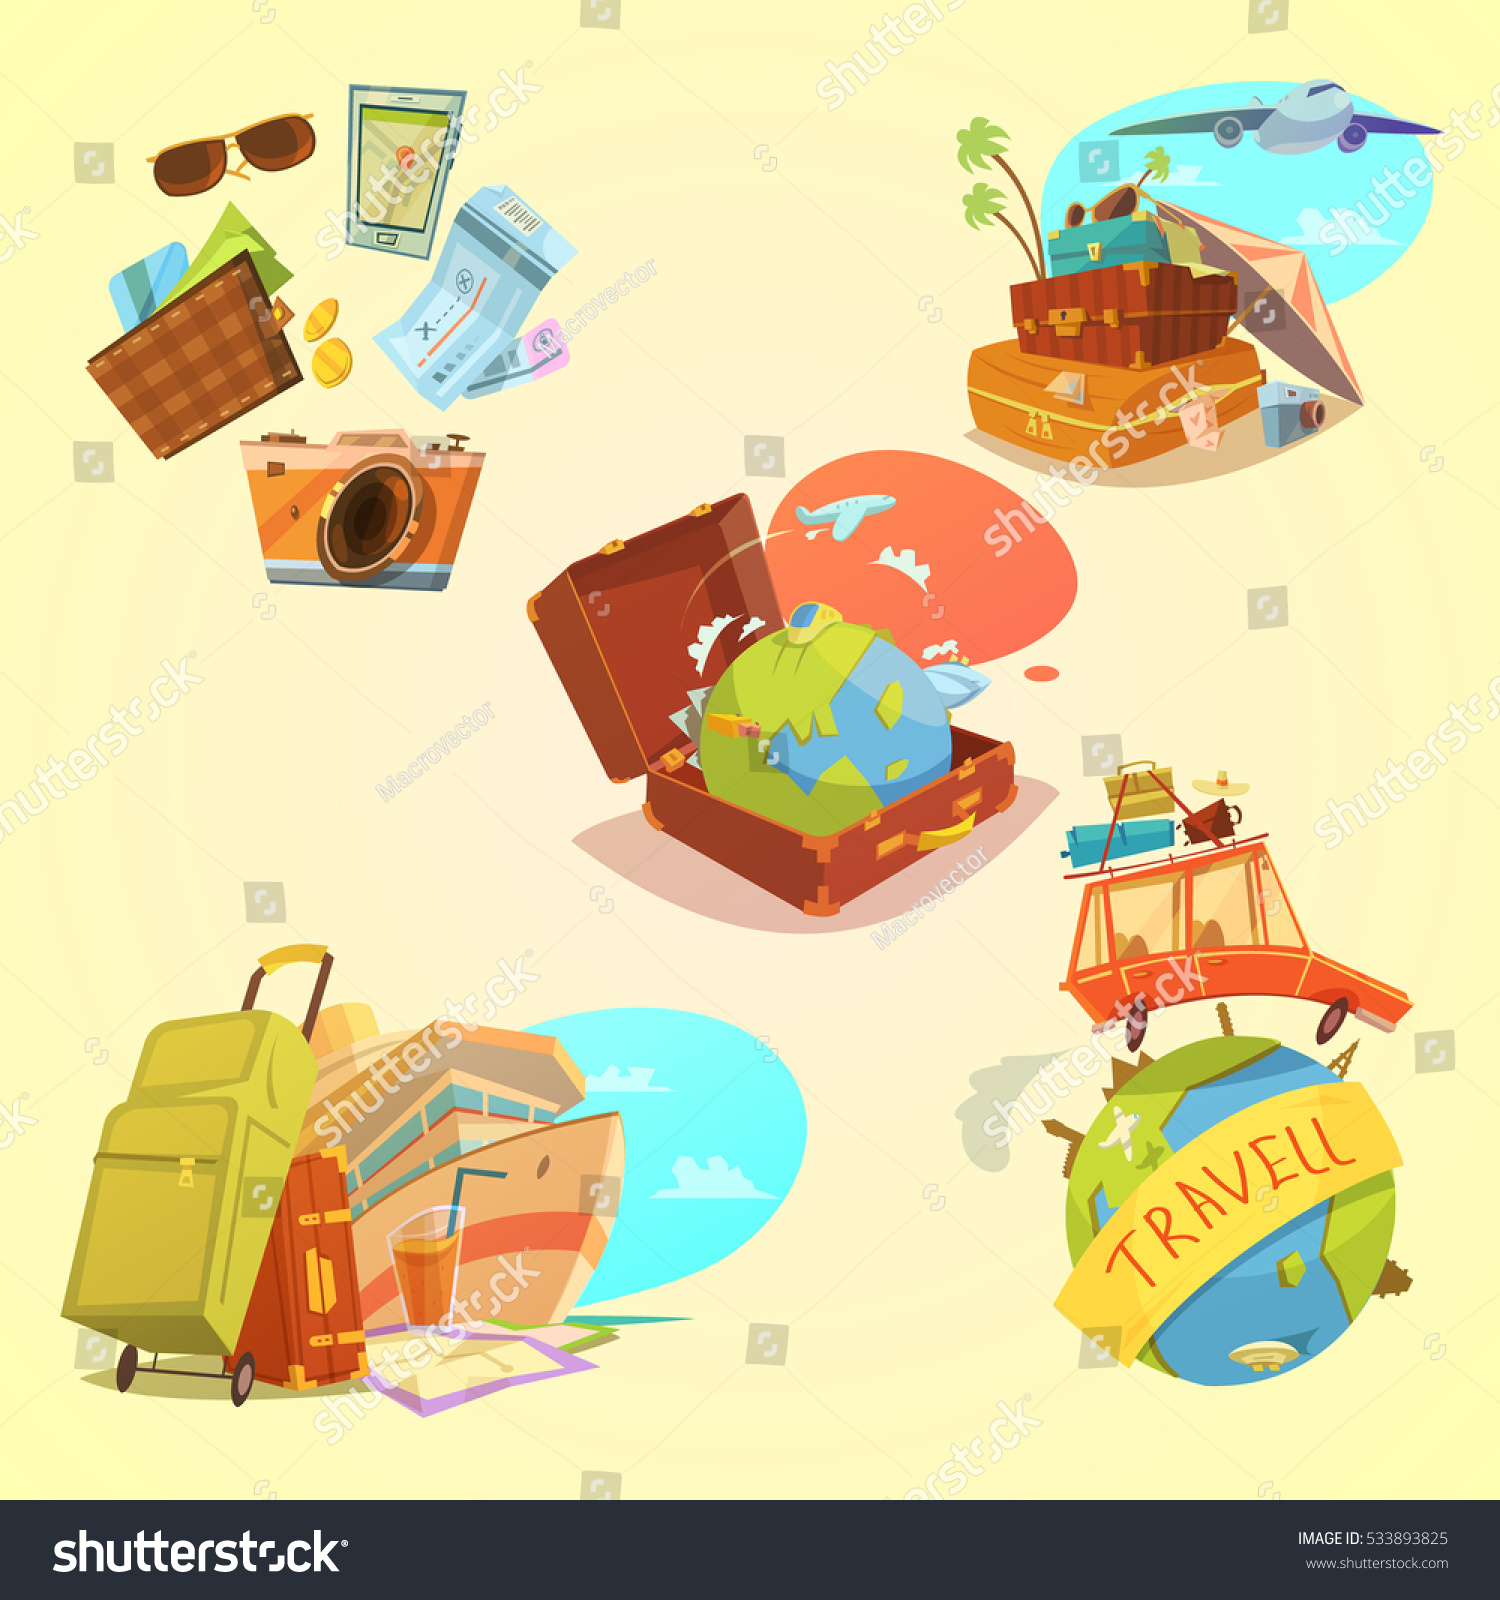 Edit Vectors Free Online - Travel cartoon | Shutterstock Editor